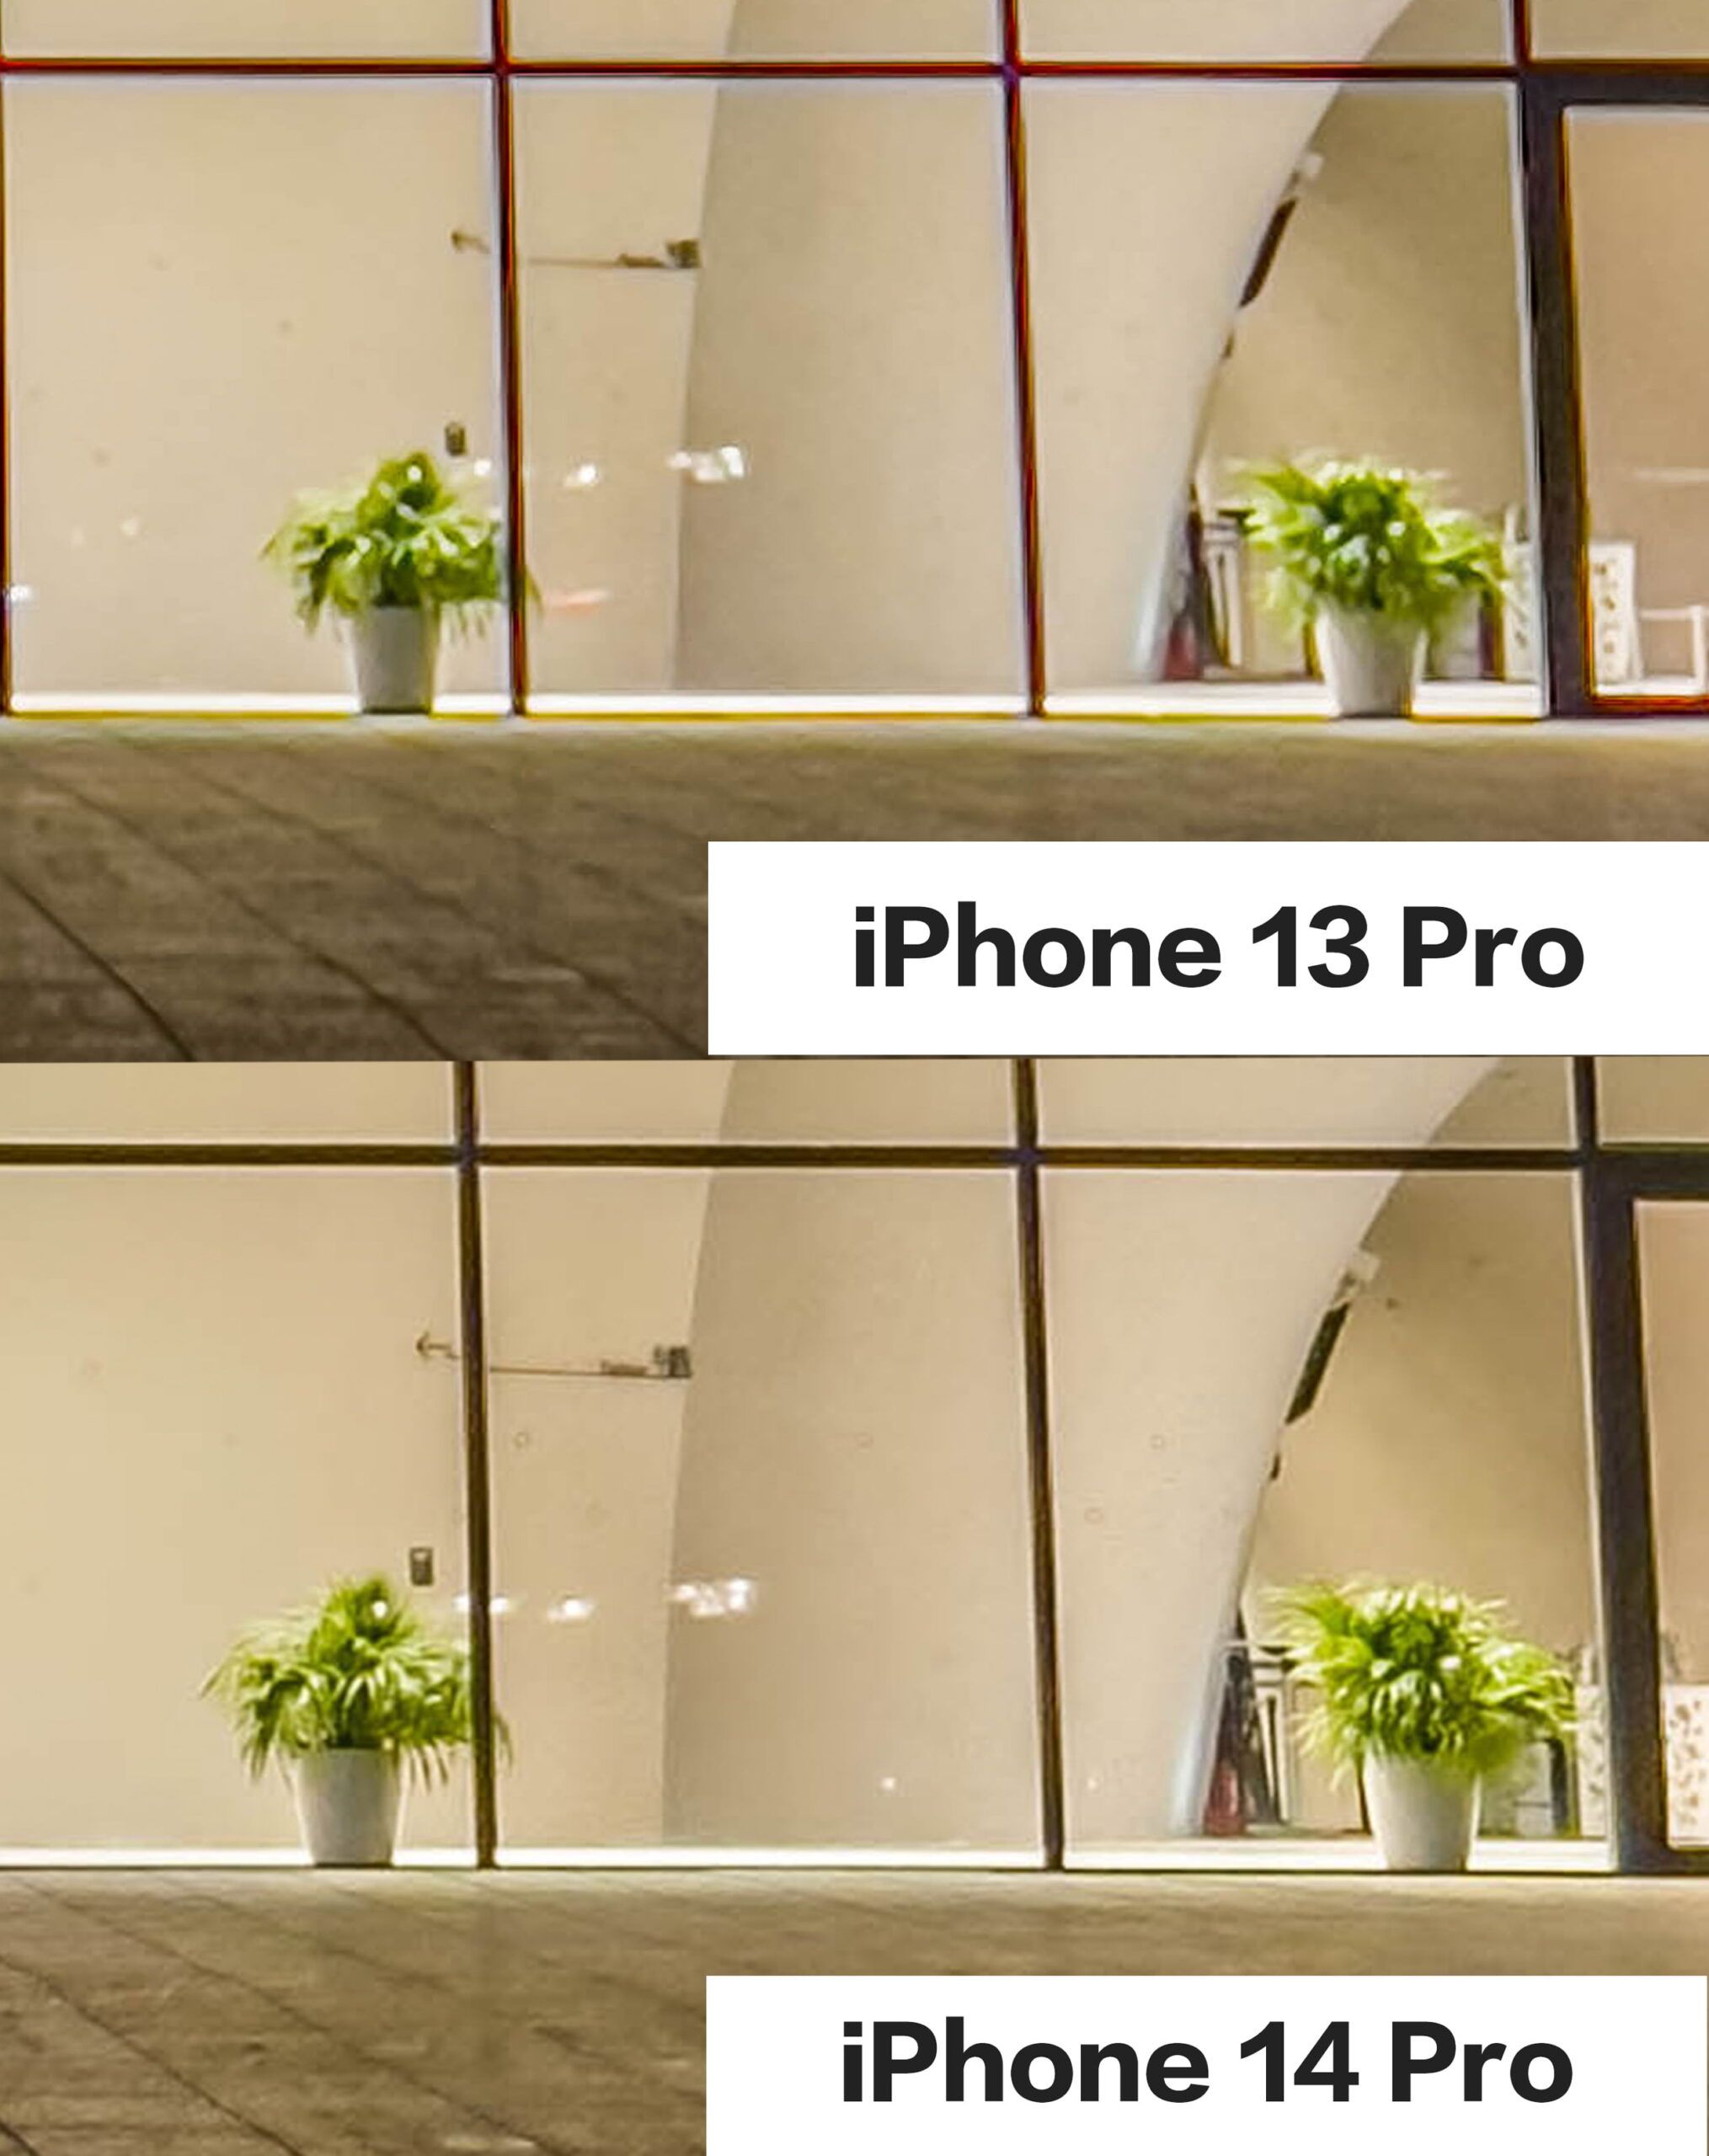 iPhone 14 Pro 2x zoom ProRAW lens night shot comparison 1